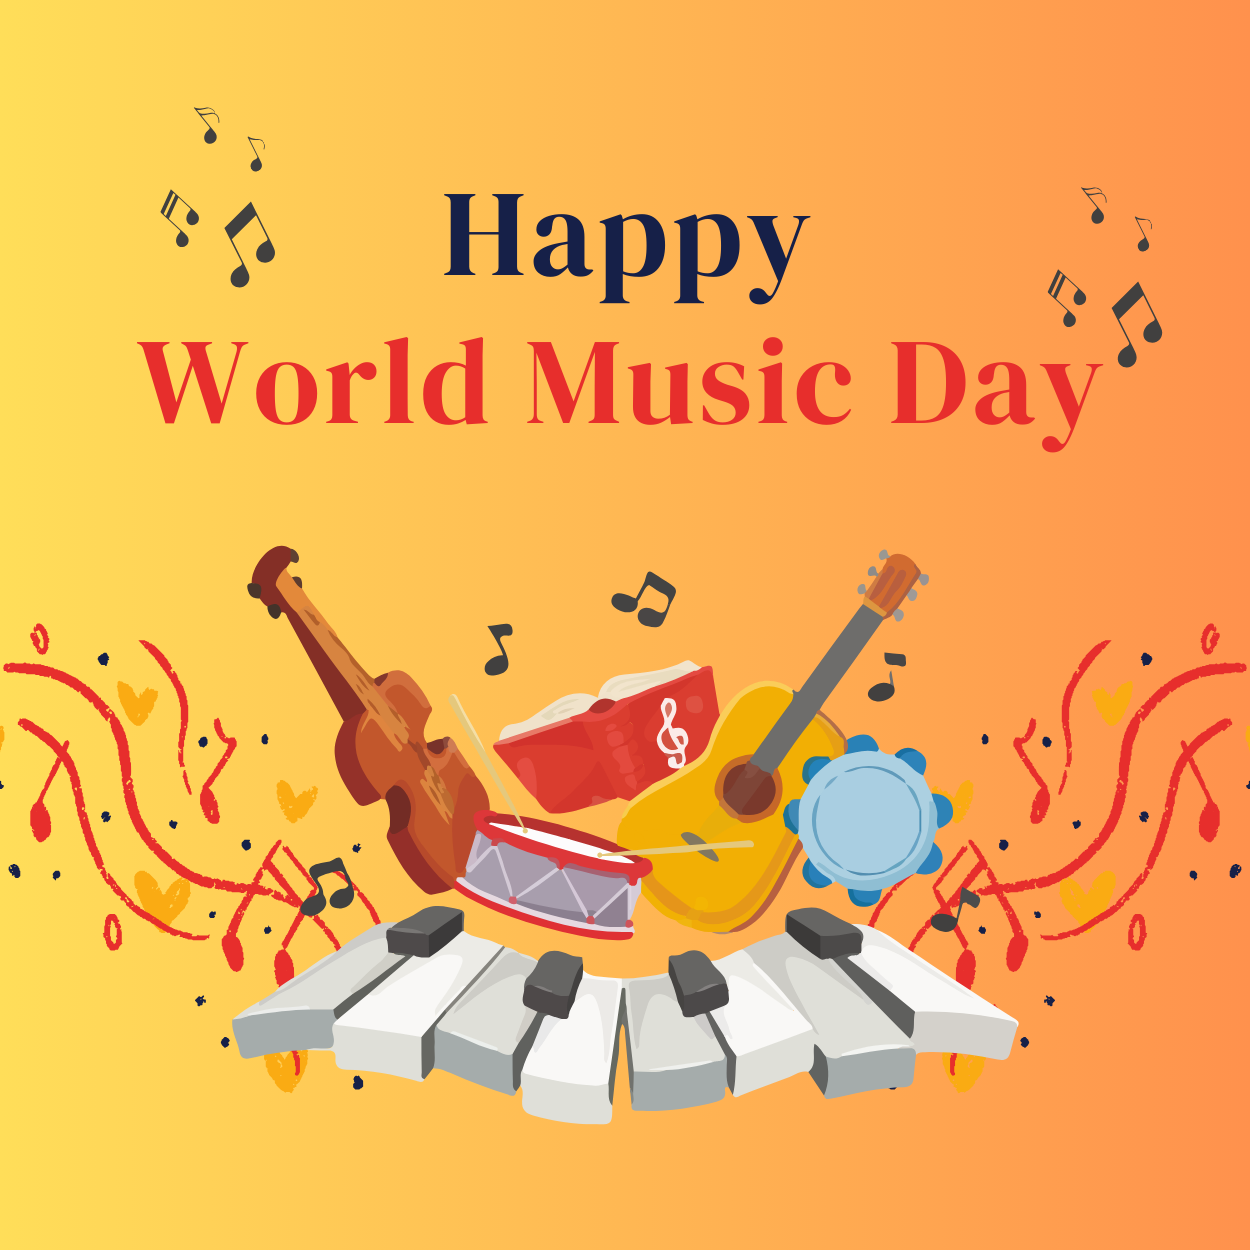 HAPPY WORLD MUSIC DAY